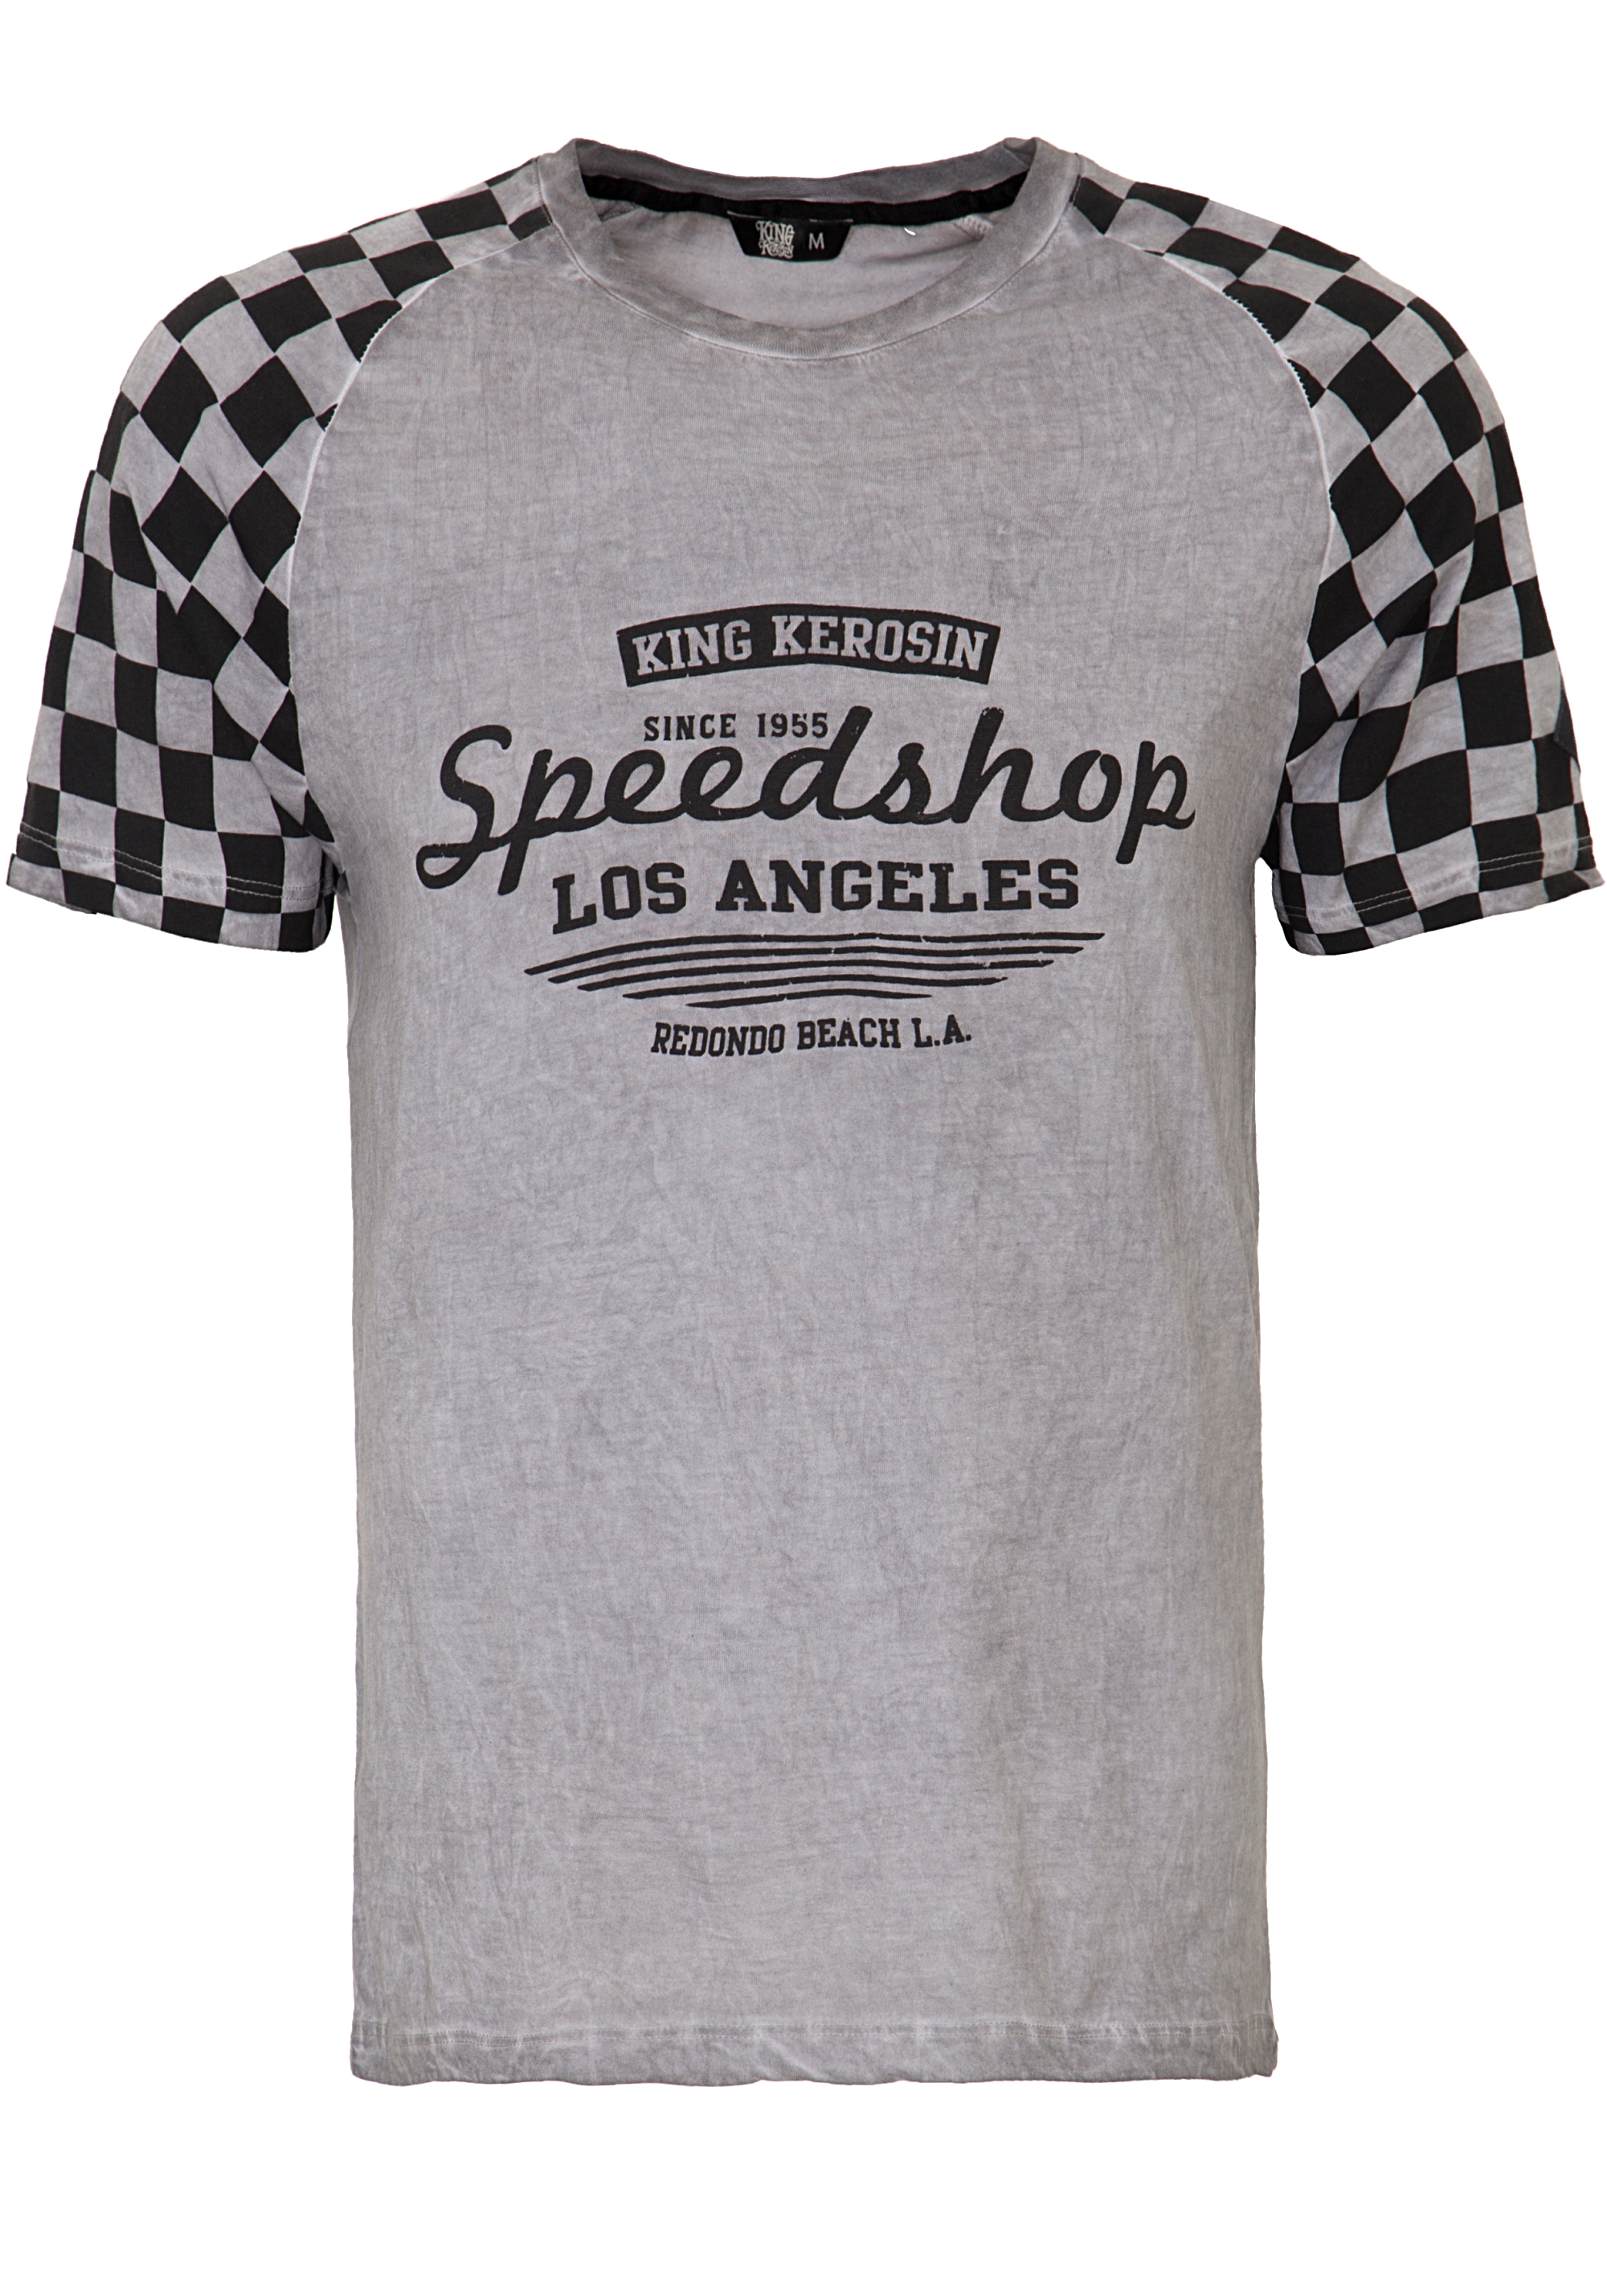 King Kerosin T-Shirt - Speedshop LA S